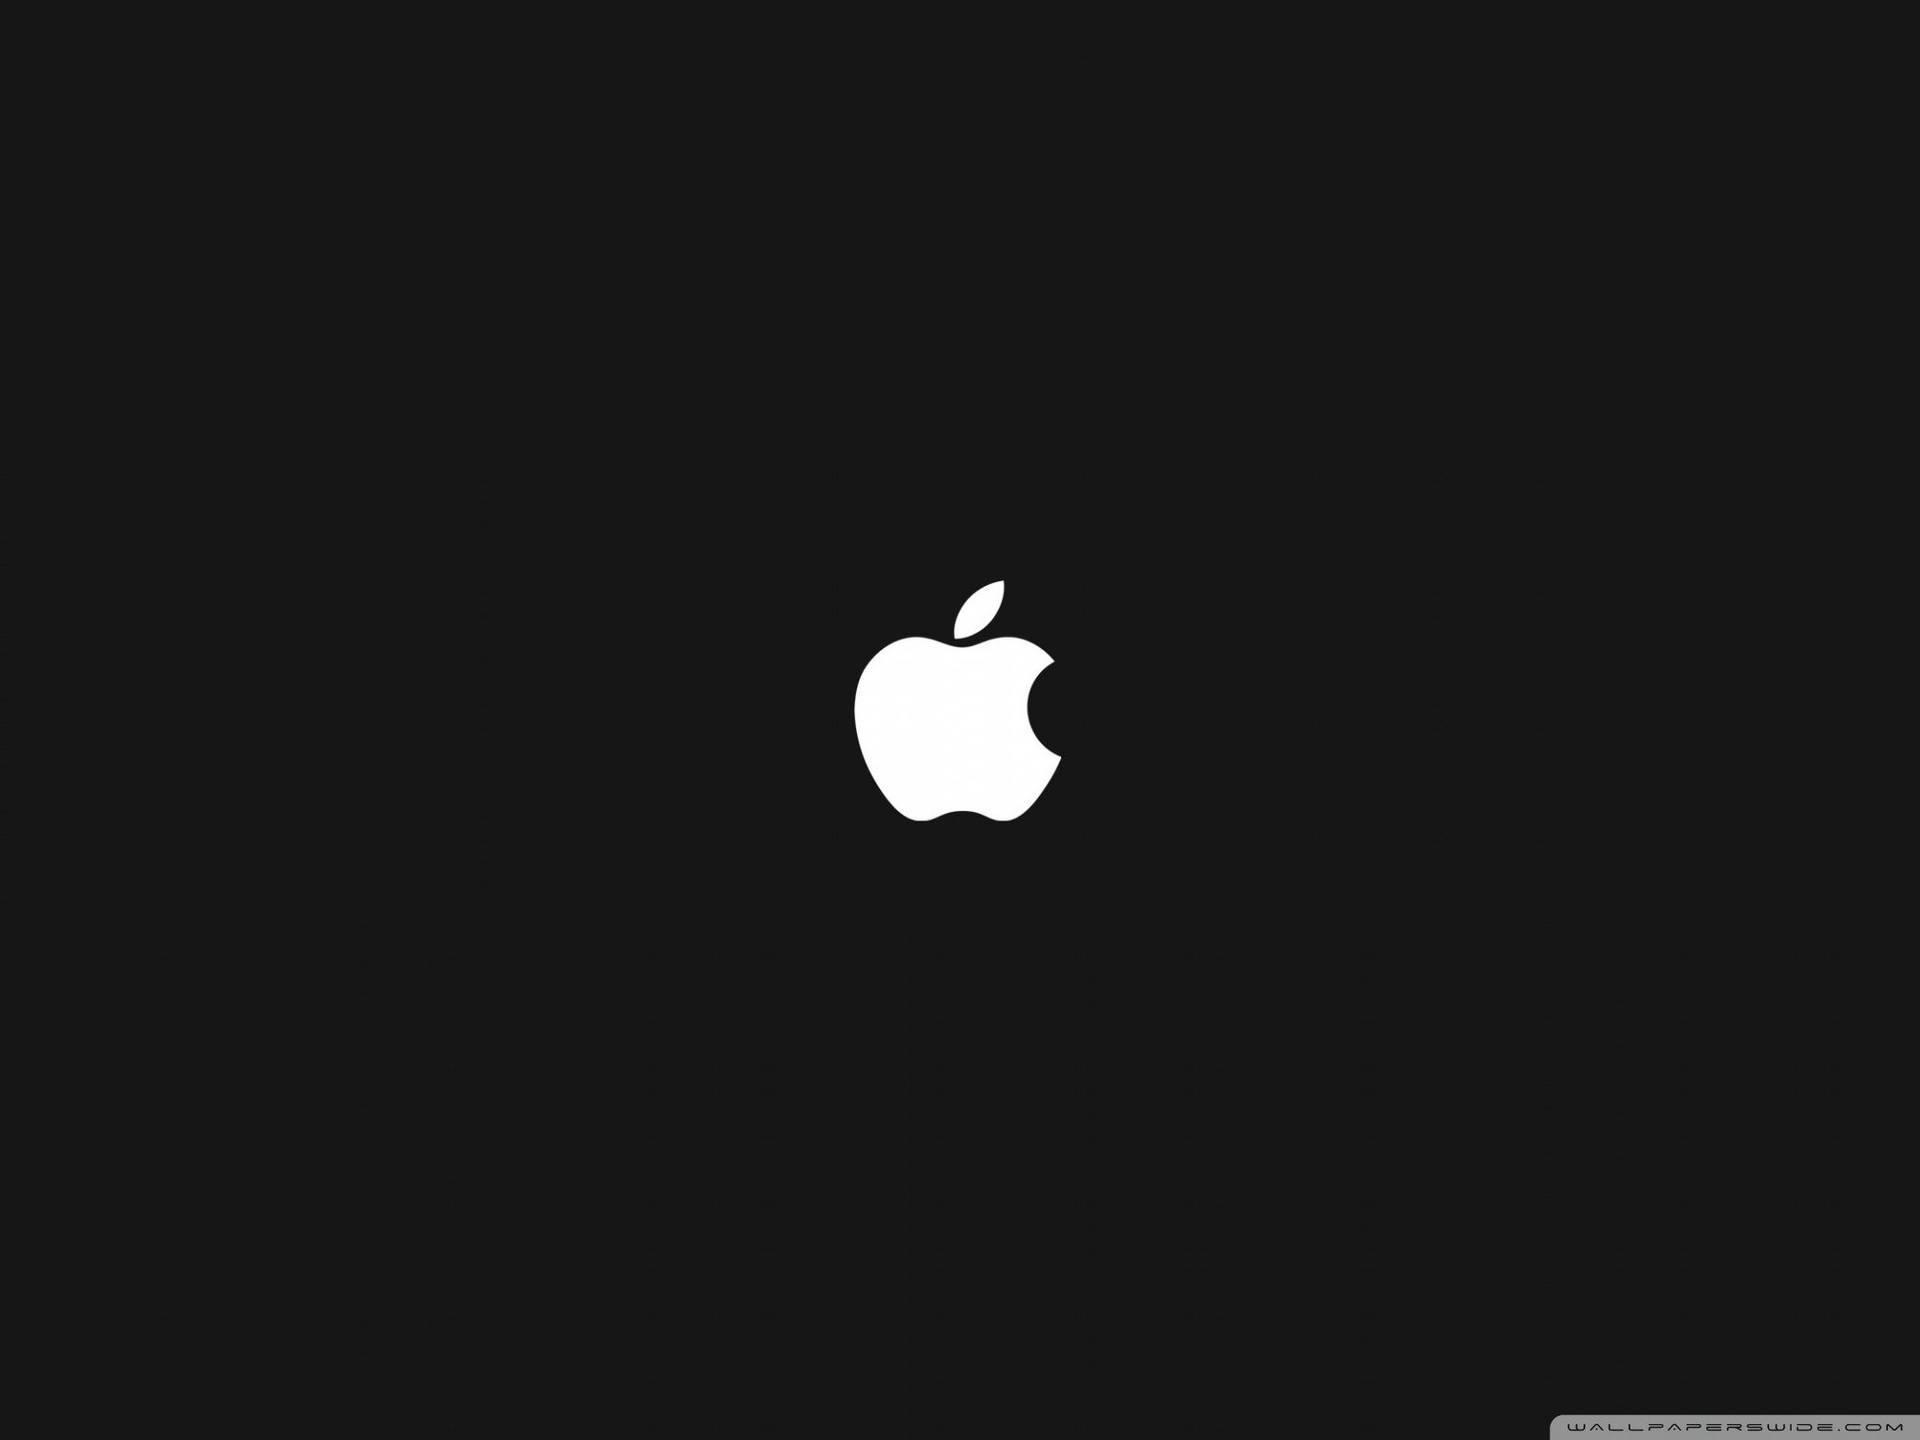 White Apple Logo On Black Background